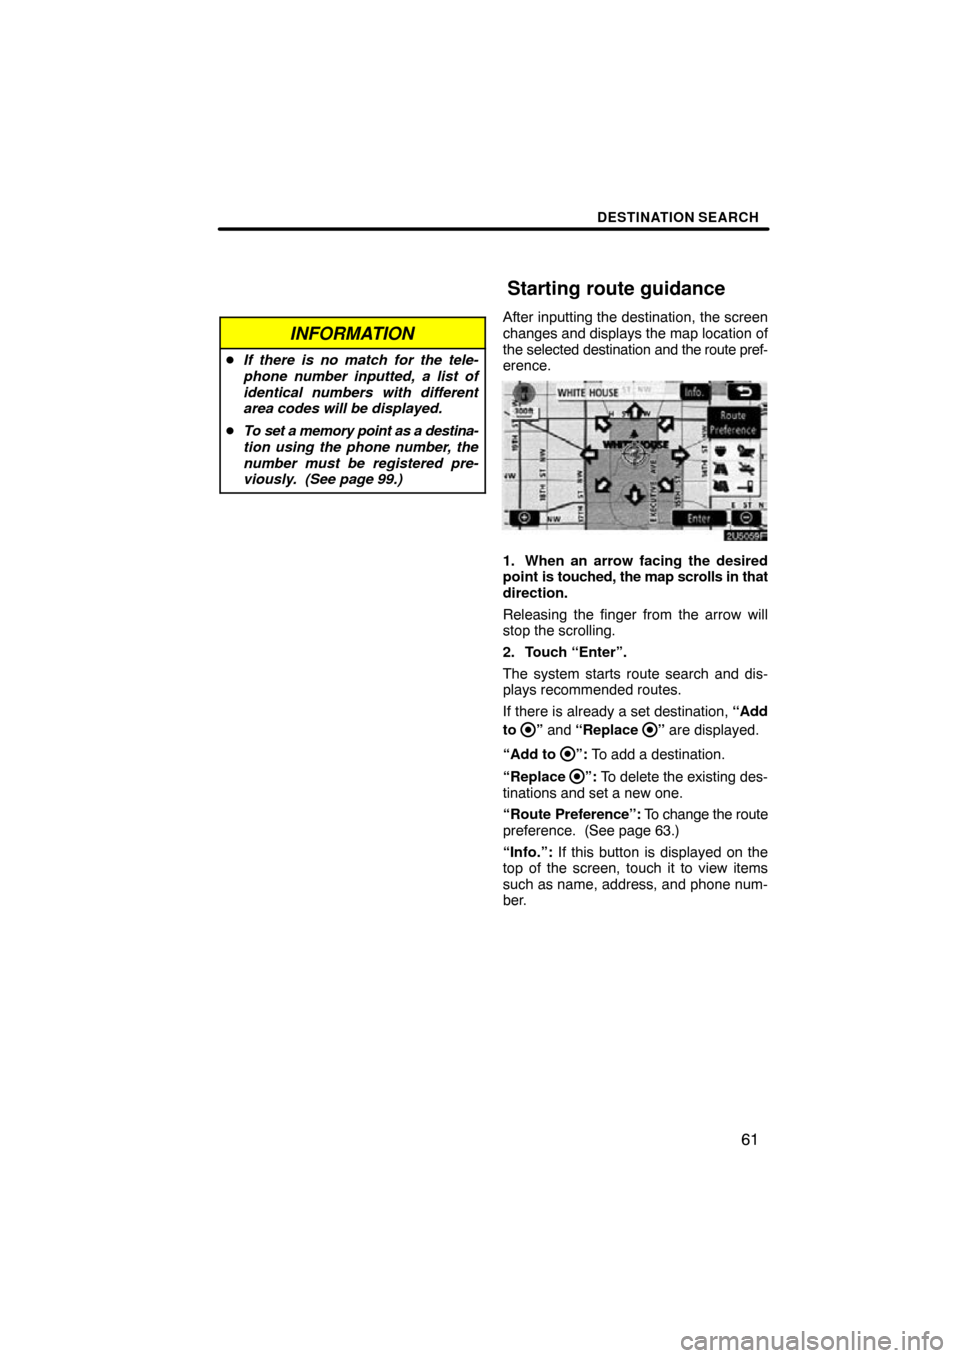 TOYOTA CAMRY 2009 XV40 / 8.G Navigation Manual DESTINATION SEARCH
61
INFORMATION
If there is no match for the tele-
phone number inputted, a list of
identical numbers with different
area codes will be displayed.
 To set a memory point as a desti